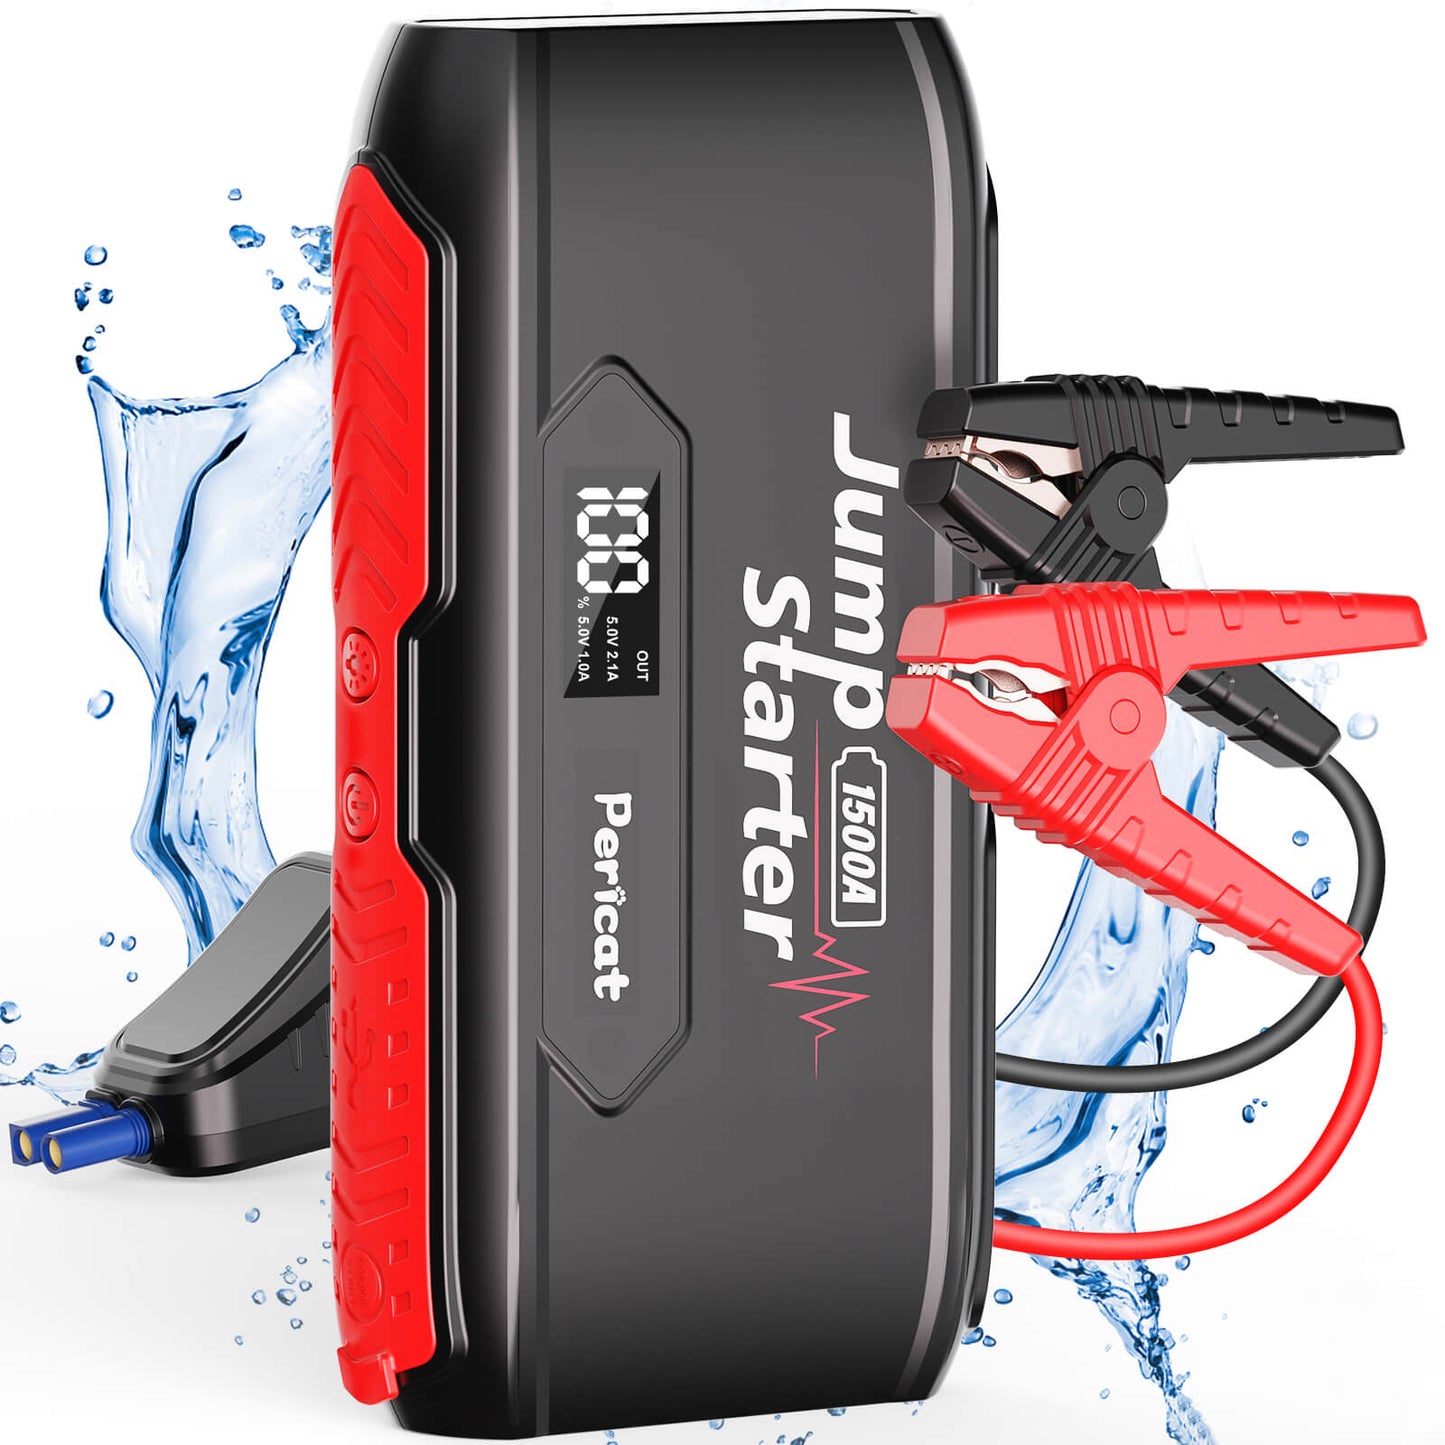 Portable Jump Starter Battery Power Car Jumper Box USB Port 400